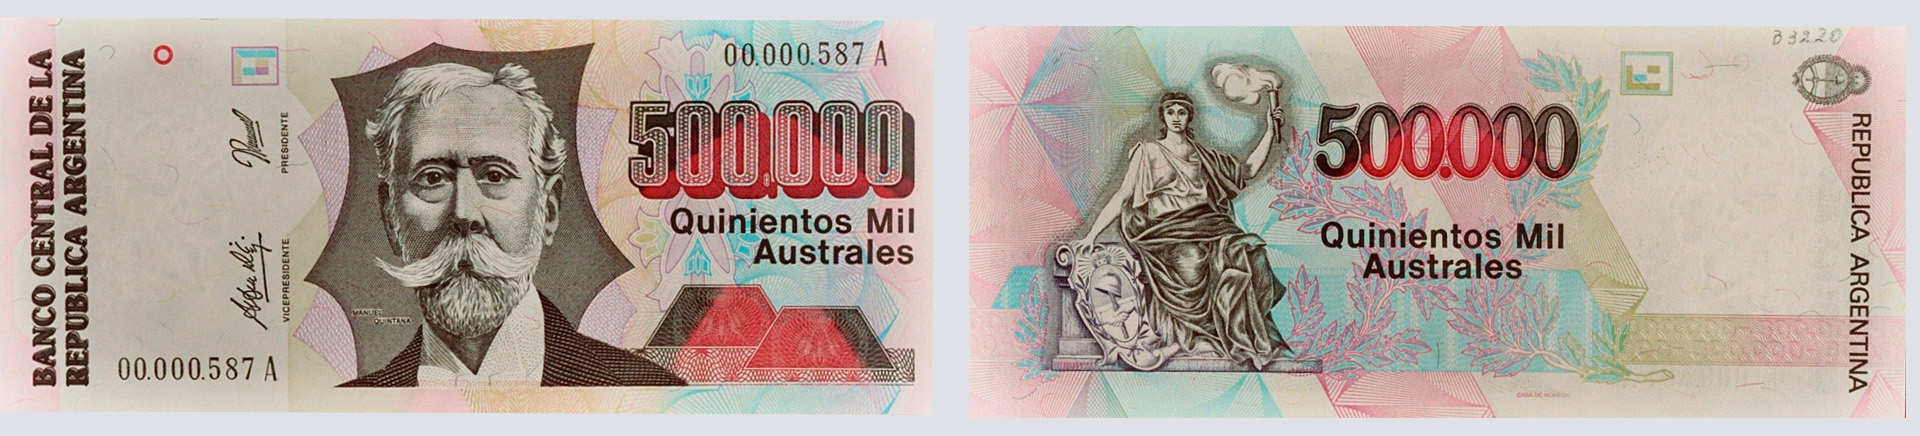 El billete de 500.000 australes (1990)